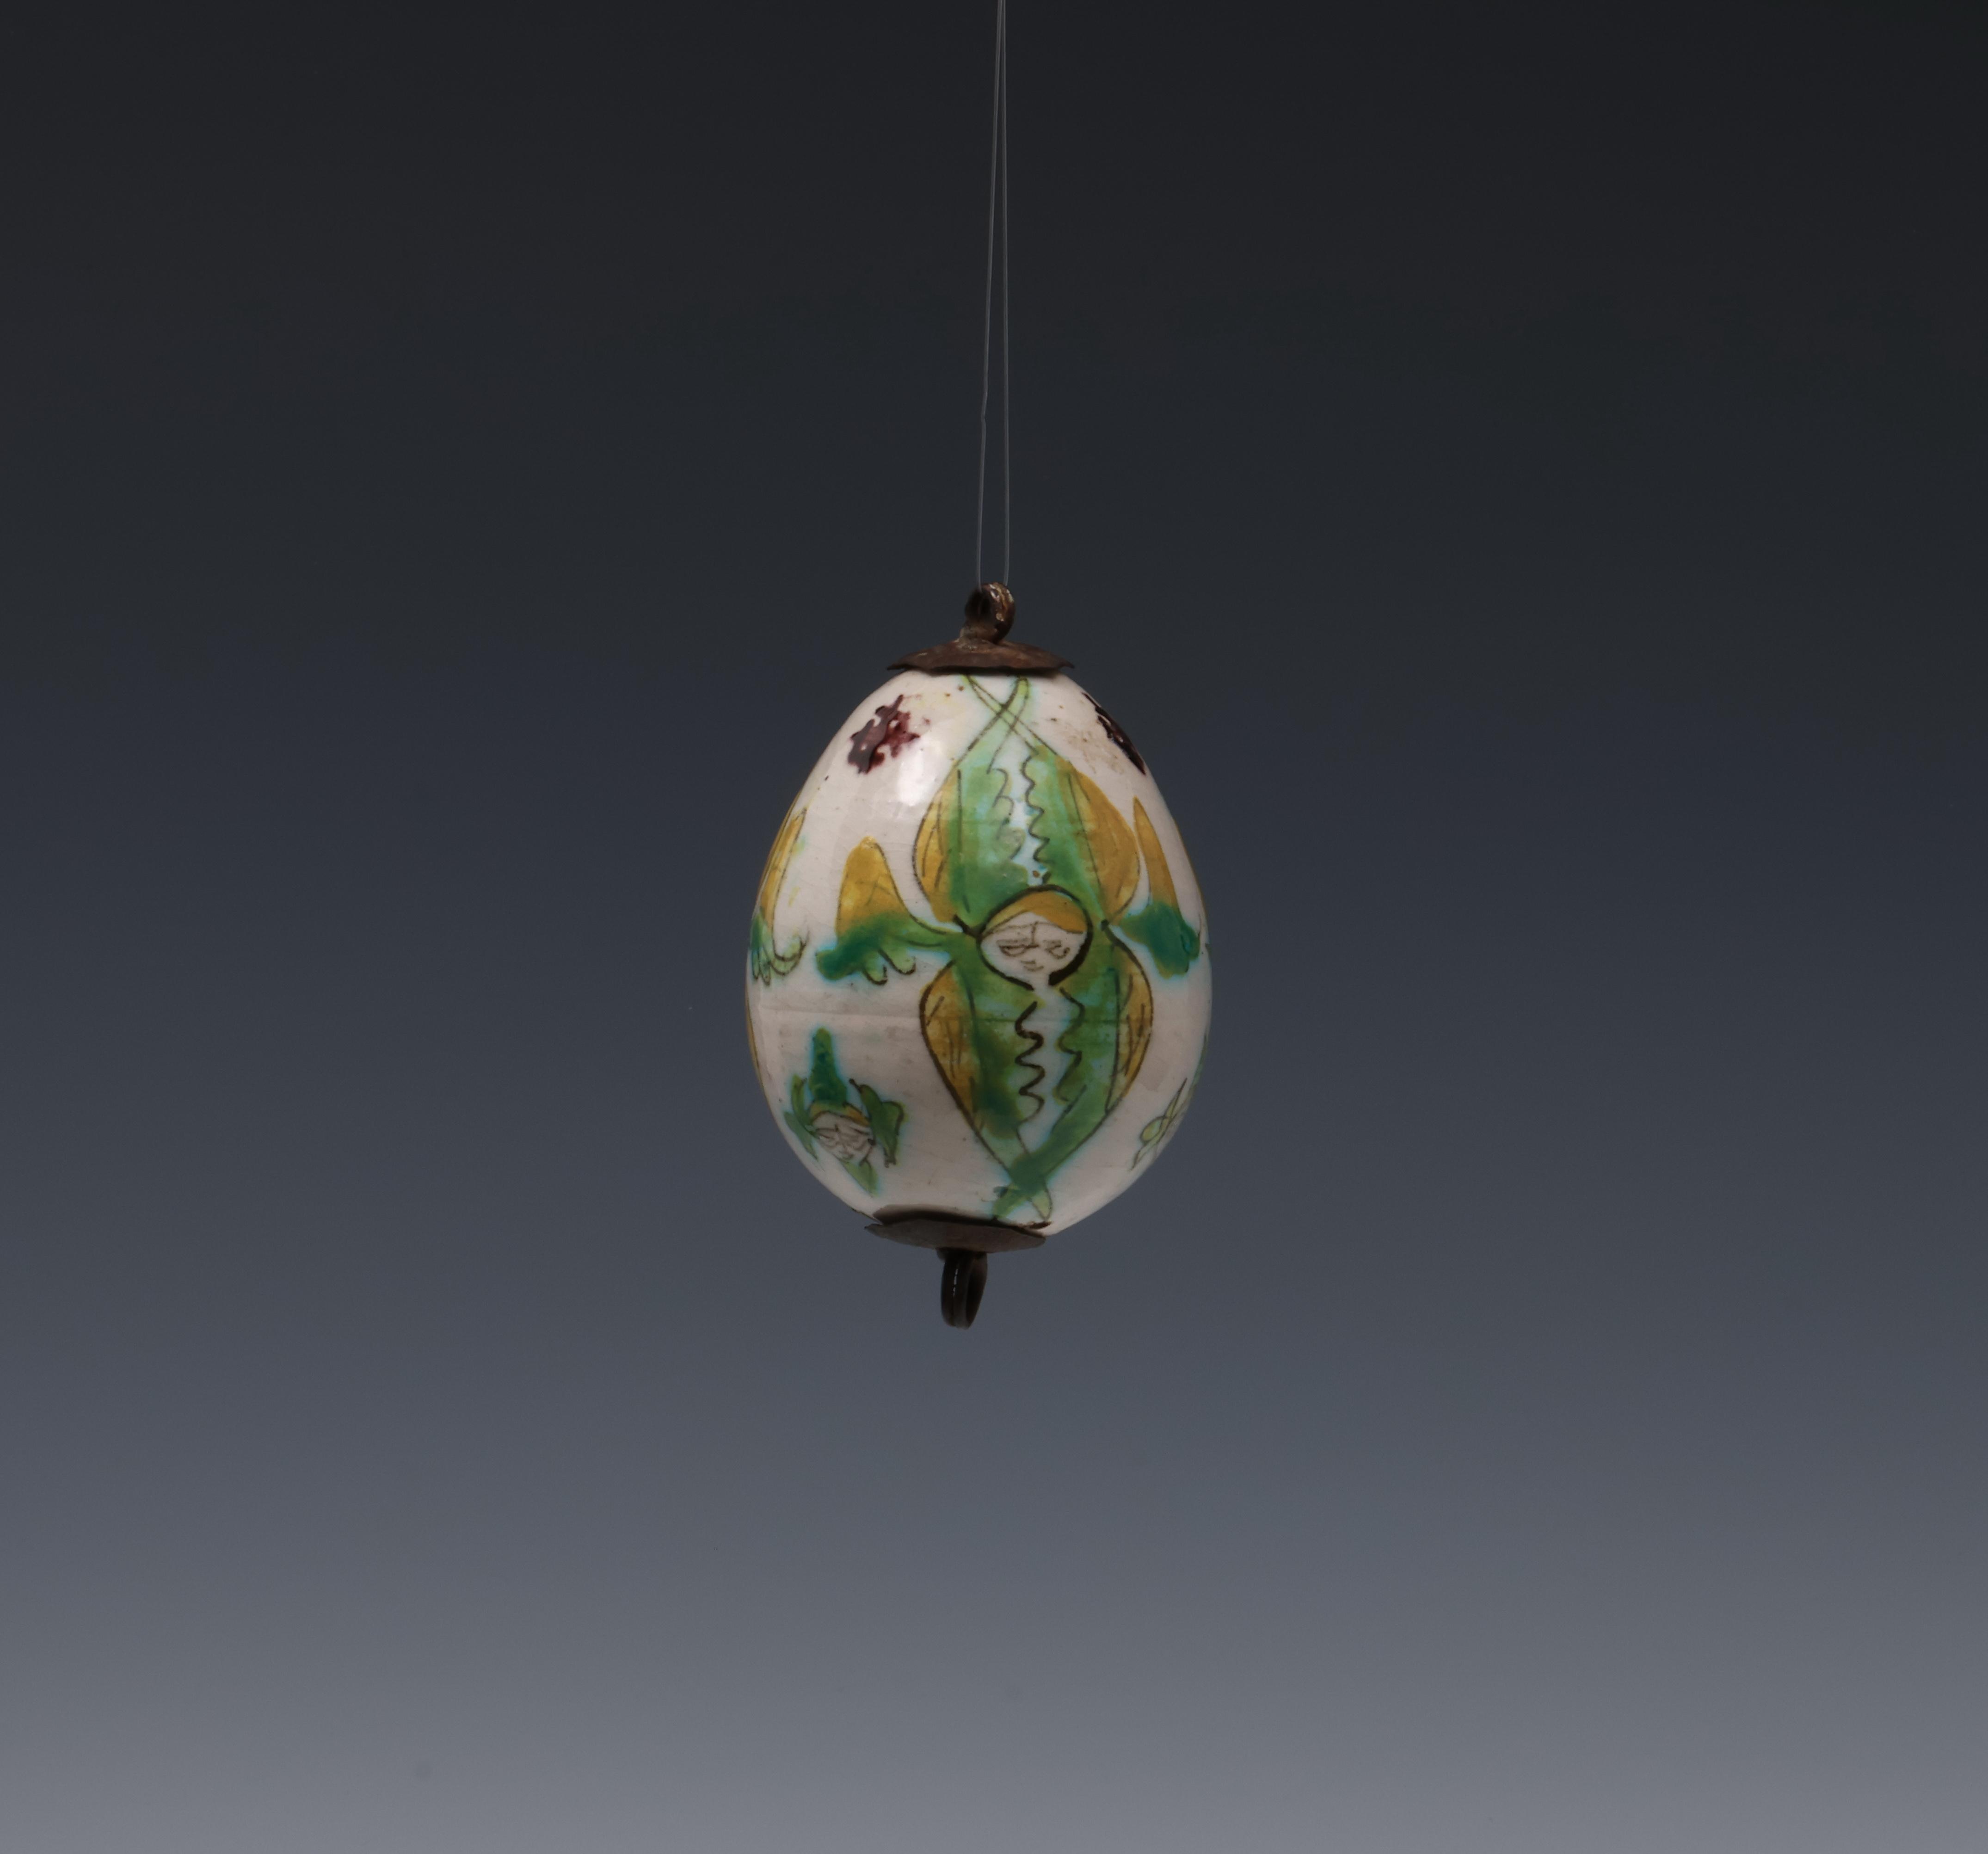 Ottoman Turkey Armenian, Kutahya ceramic egg, 18th-19th century - Image 2 of 3